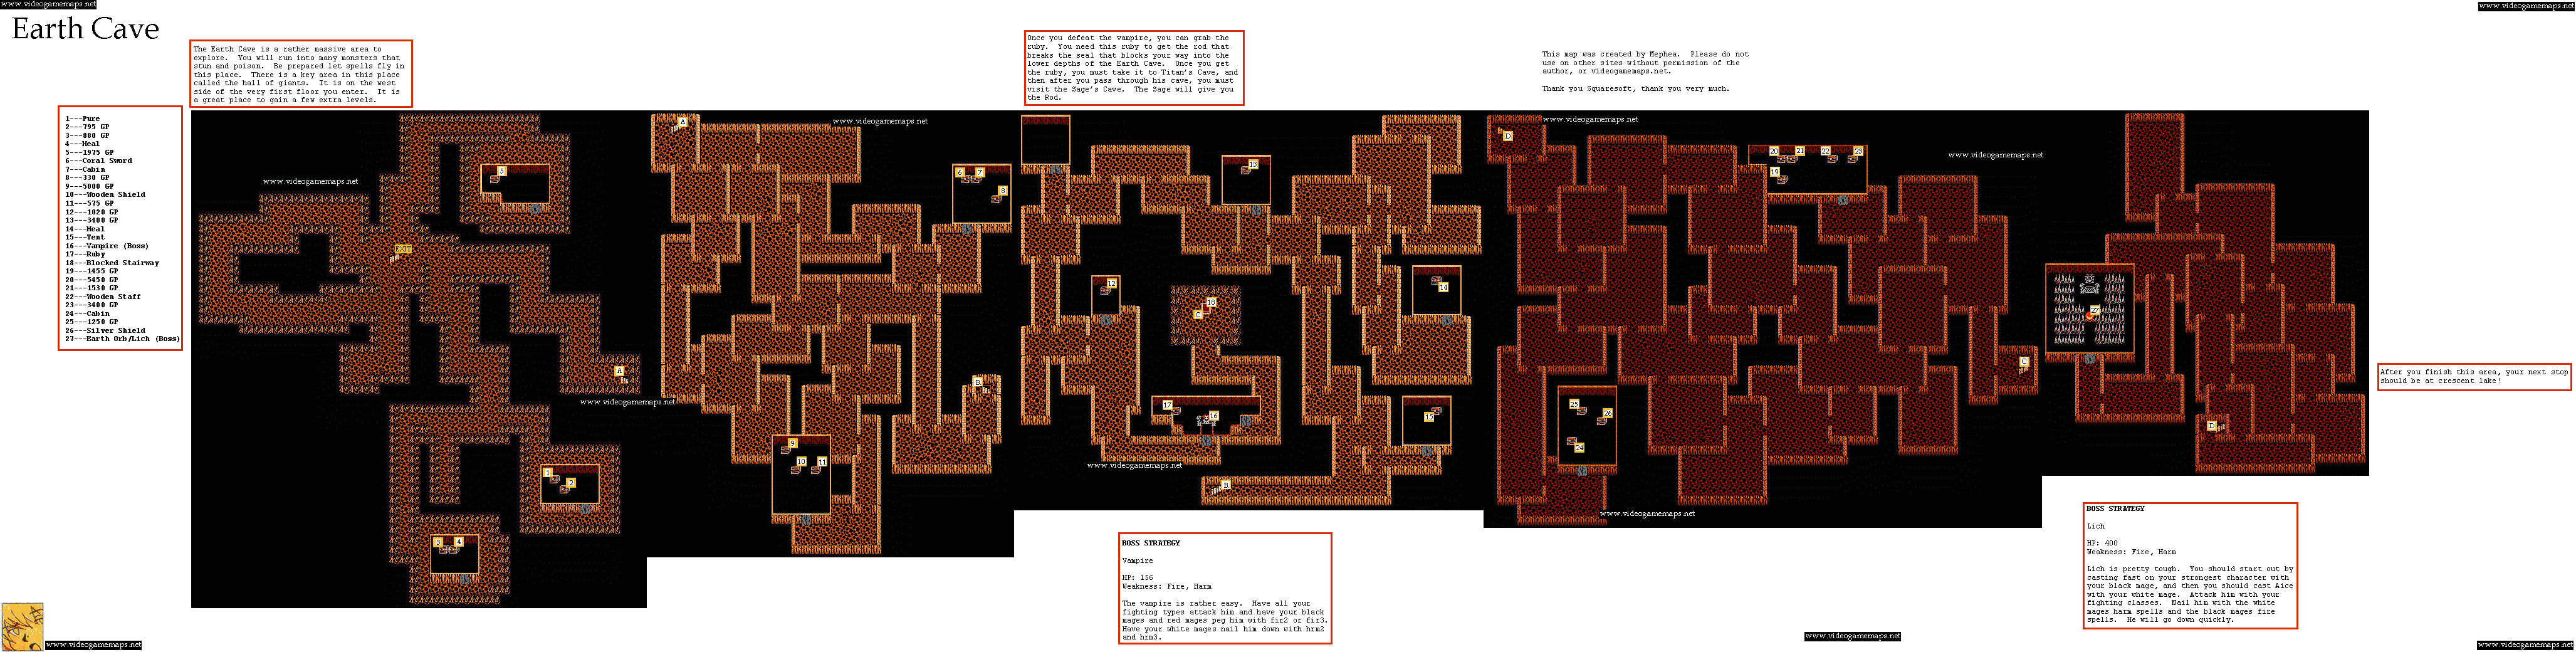 ff1-earth-cave-map-oneiroitan1